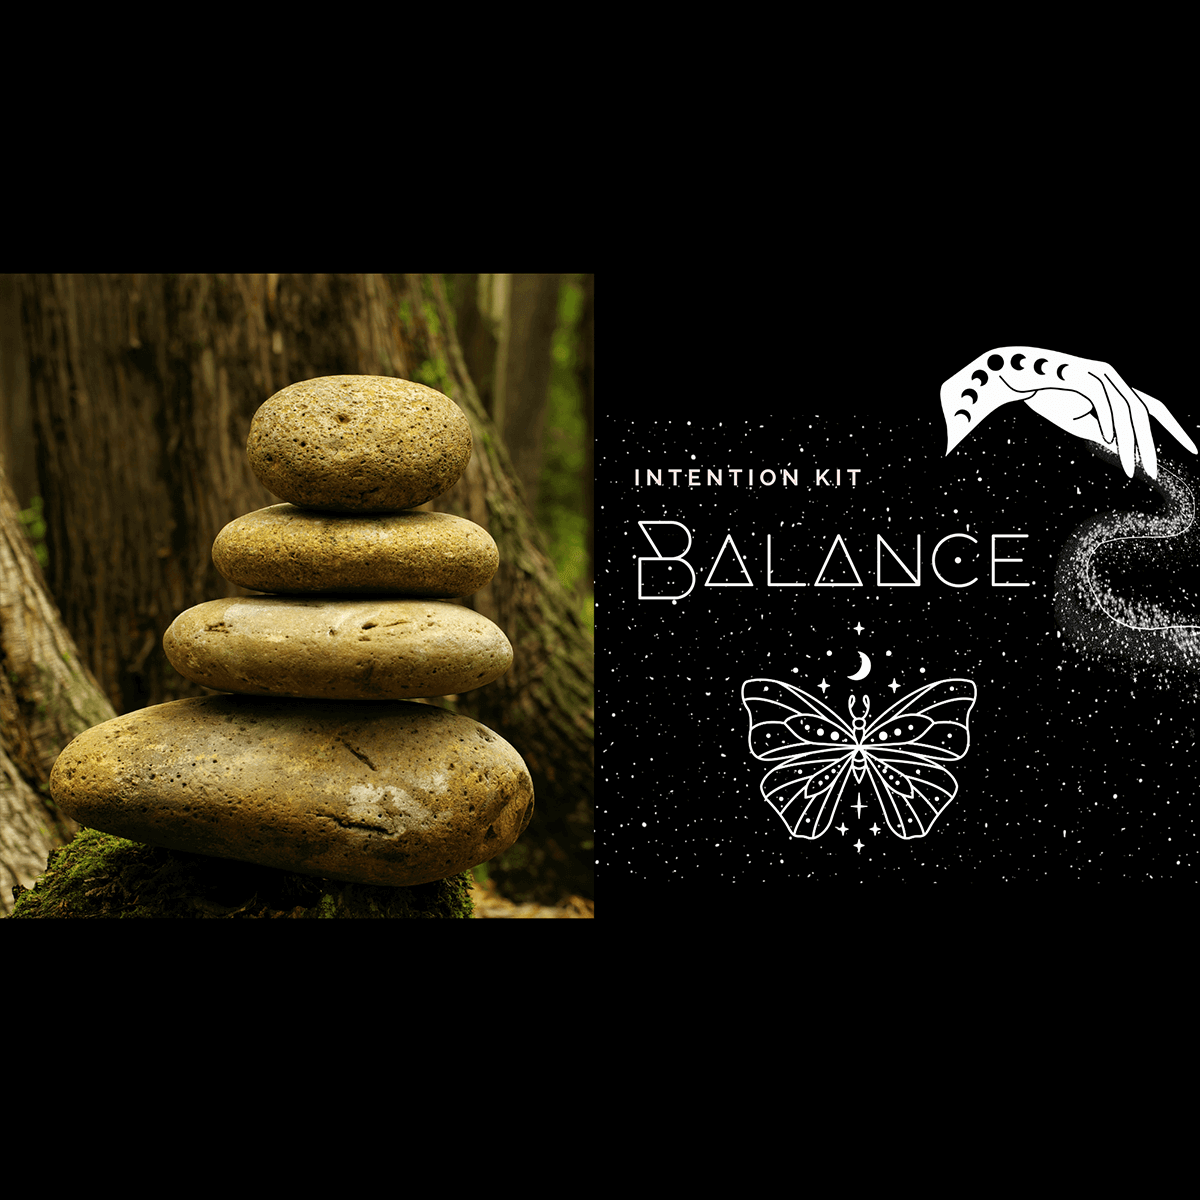 Balance Box at $85 only from Spiral Rain